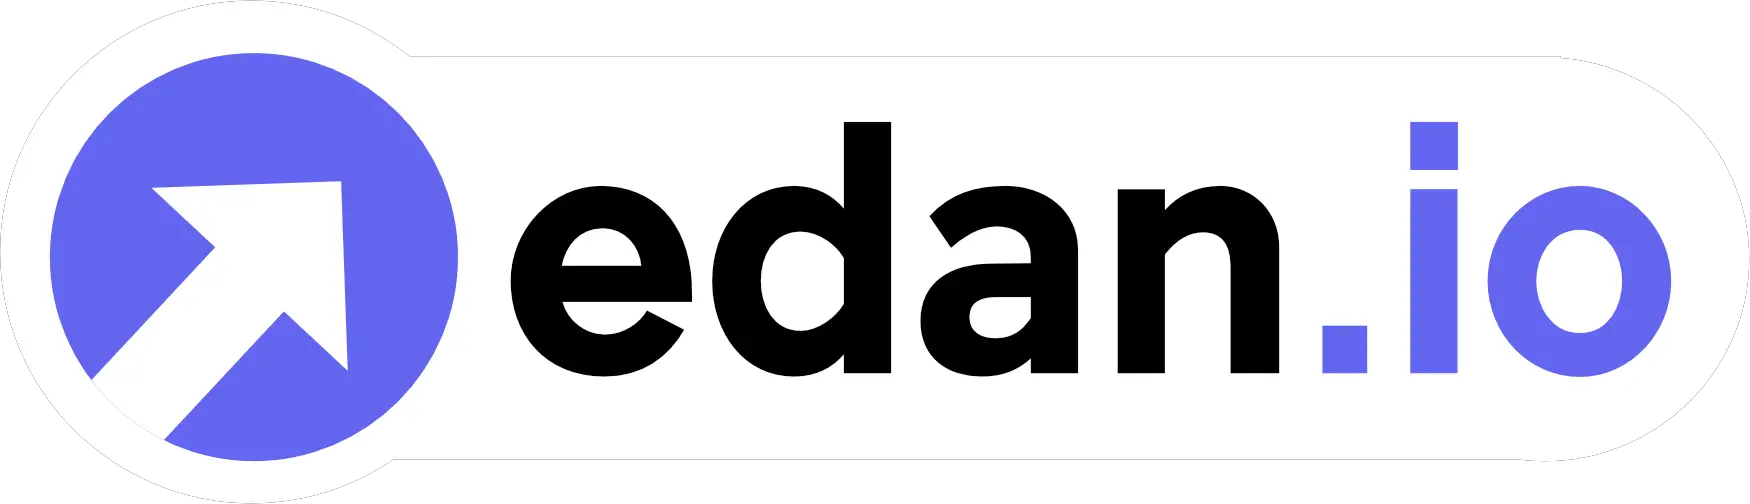 Directory logo